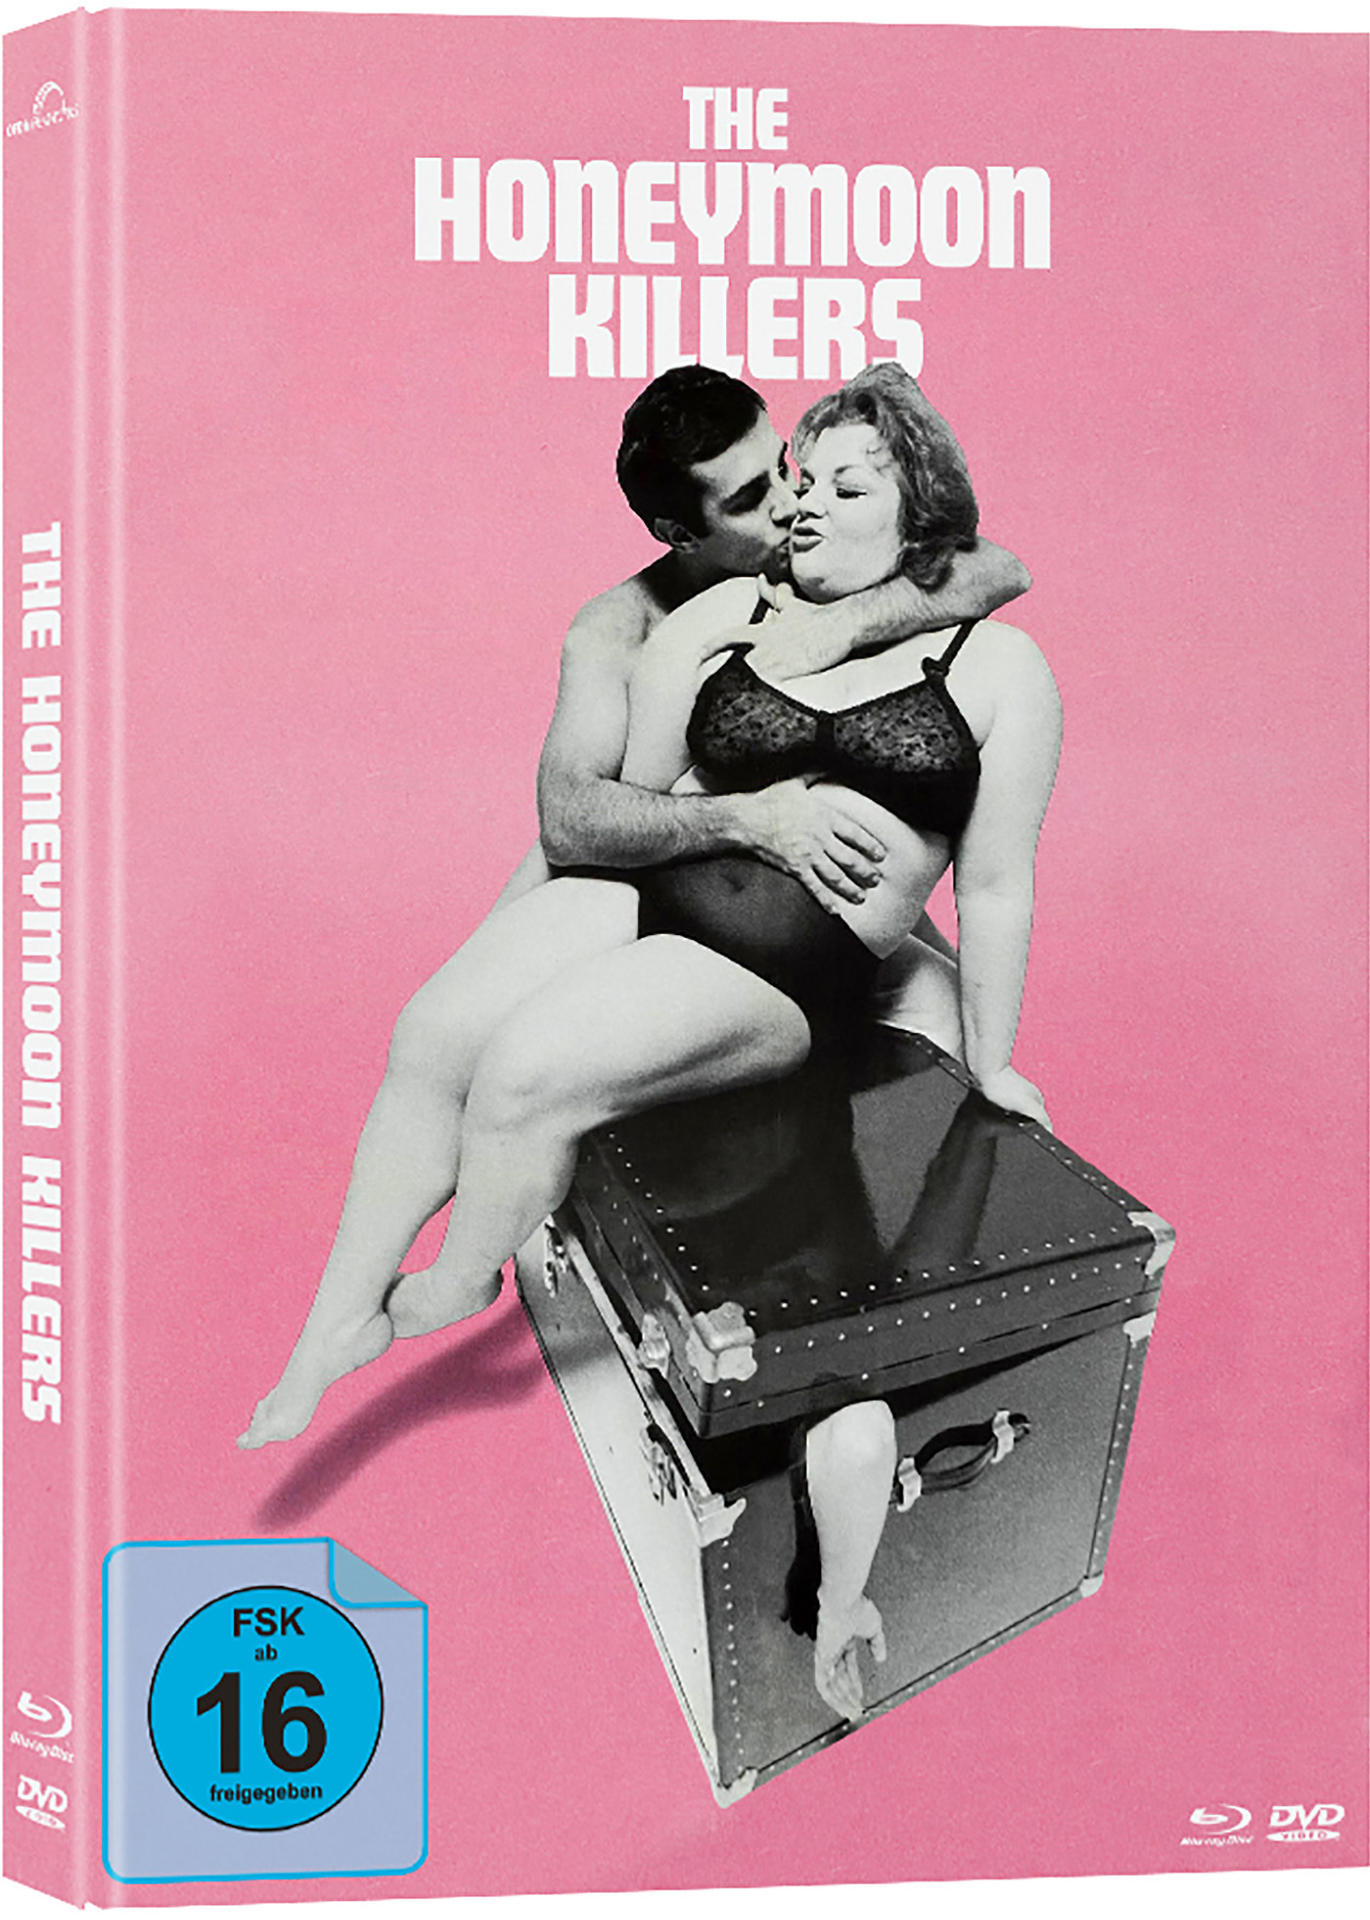 Blu-ray + The Killers Honeymoon DVD